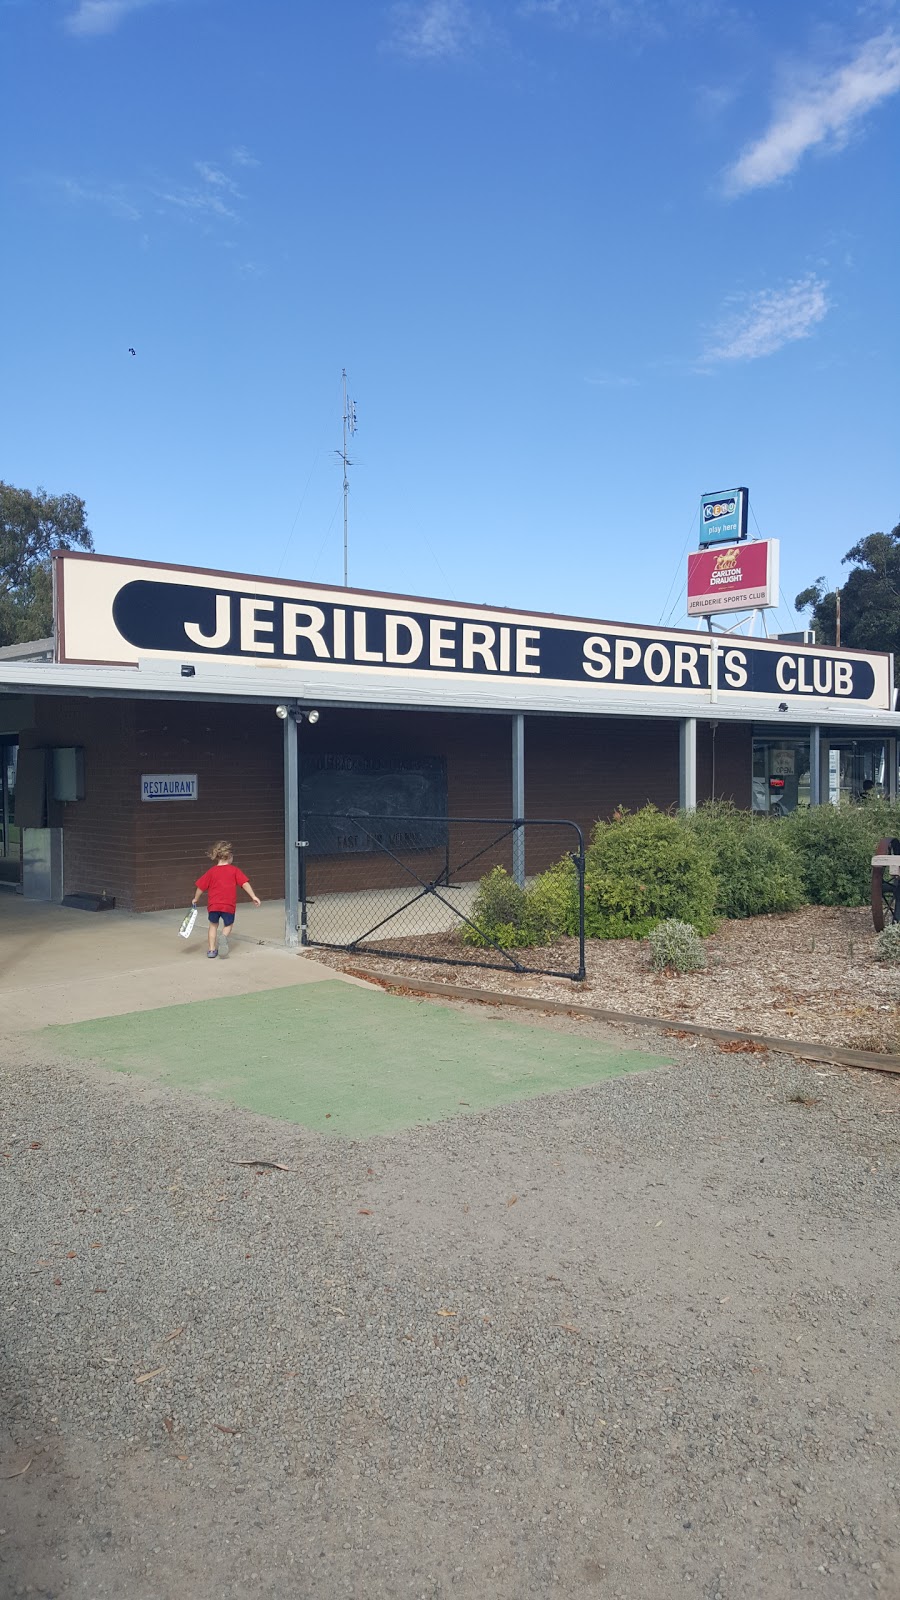 Jerilderie Sports Club Chinese Restaurant | restaurant | 123 Jerilderie St, Jerilderie NSW 2716, Australia | 0358861495 OR +61 3 5886 1495